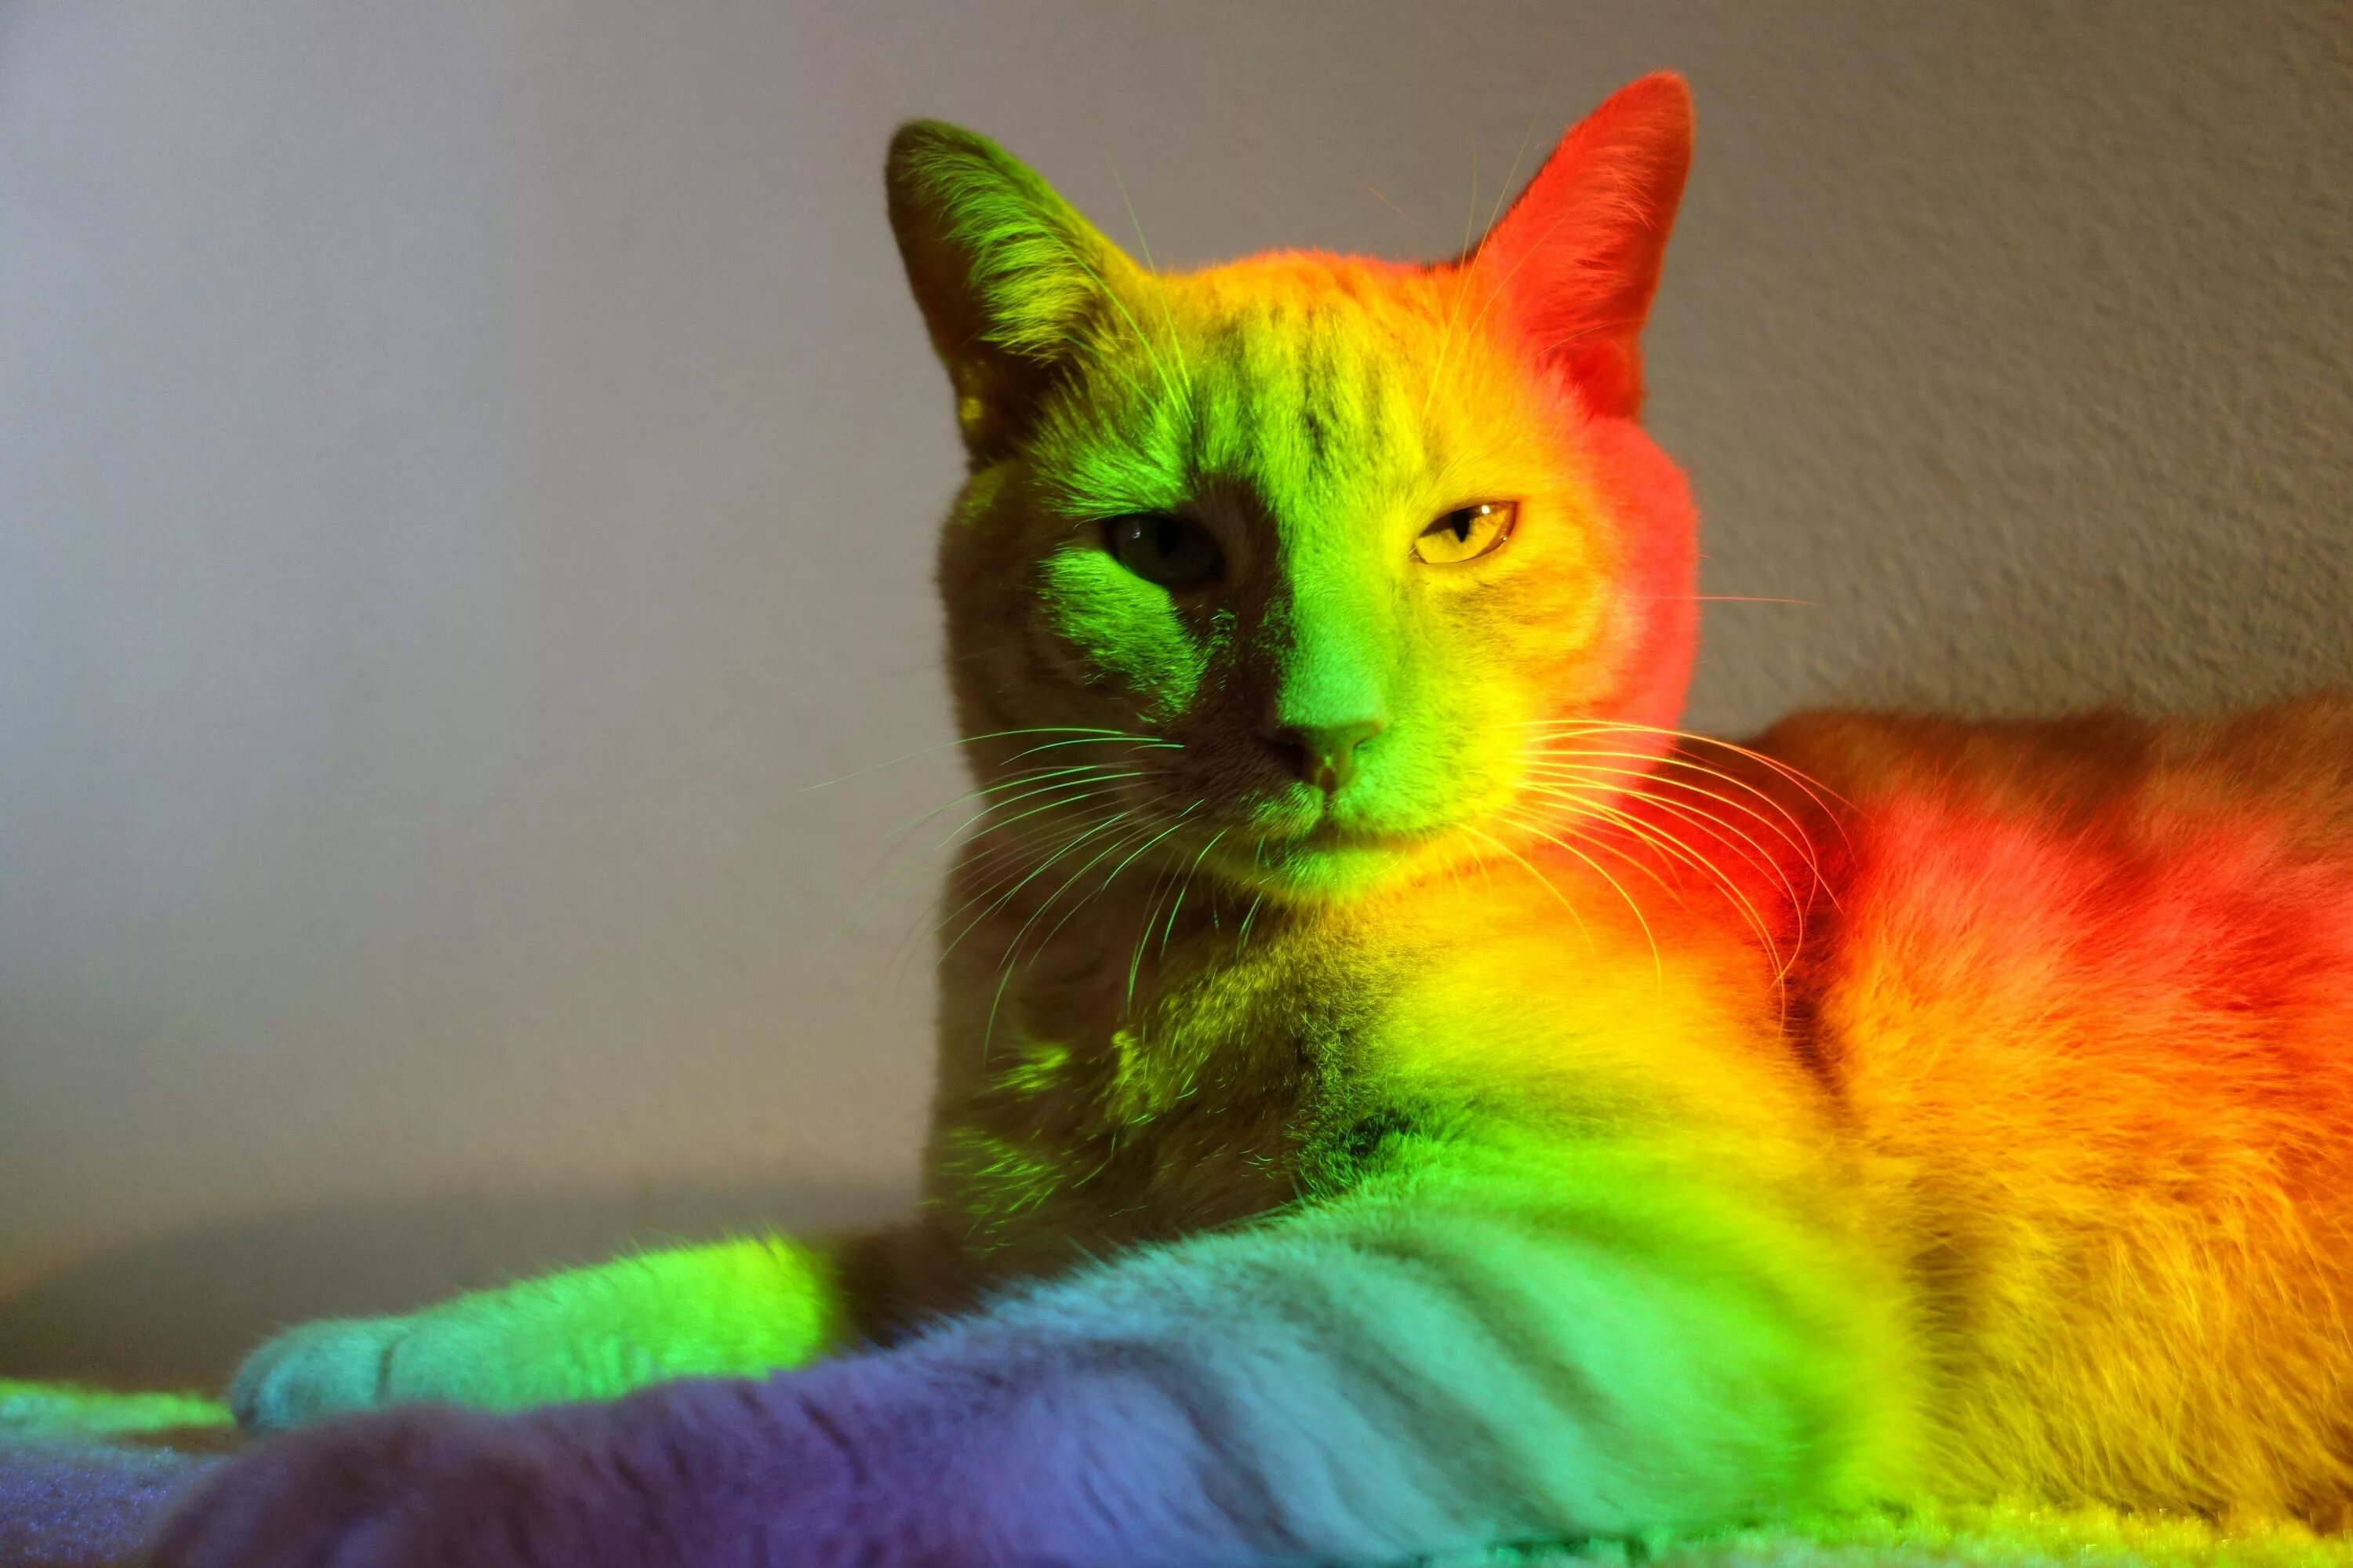 Rainbow animals